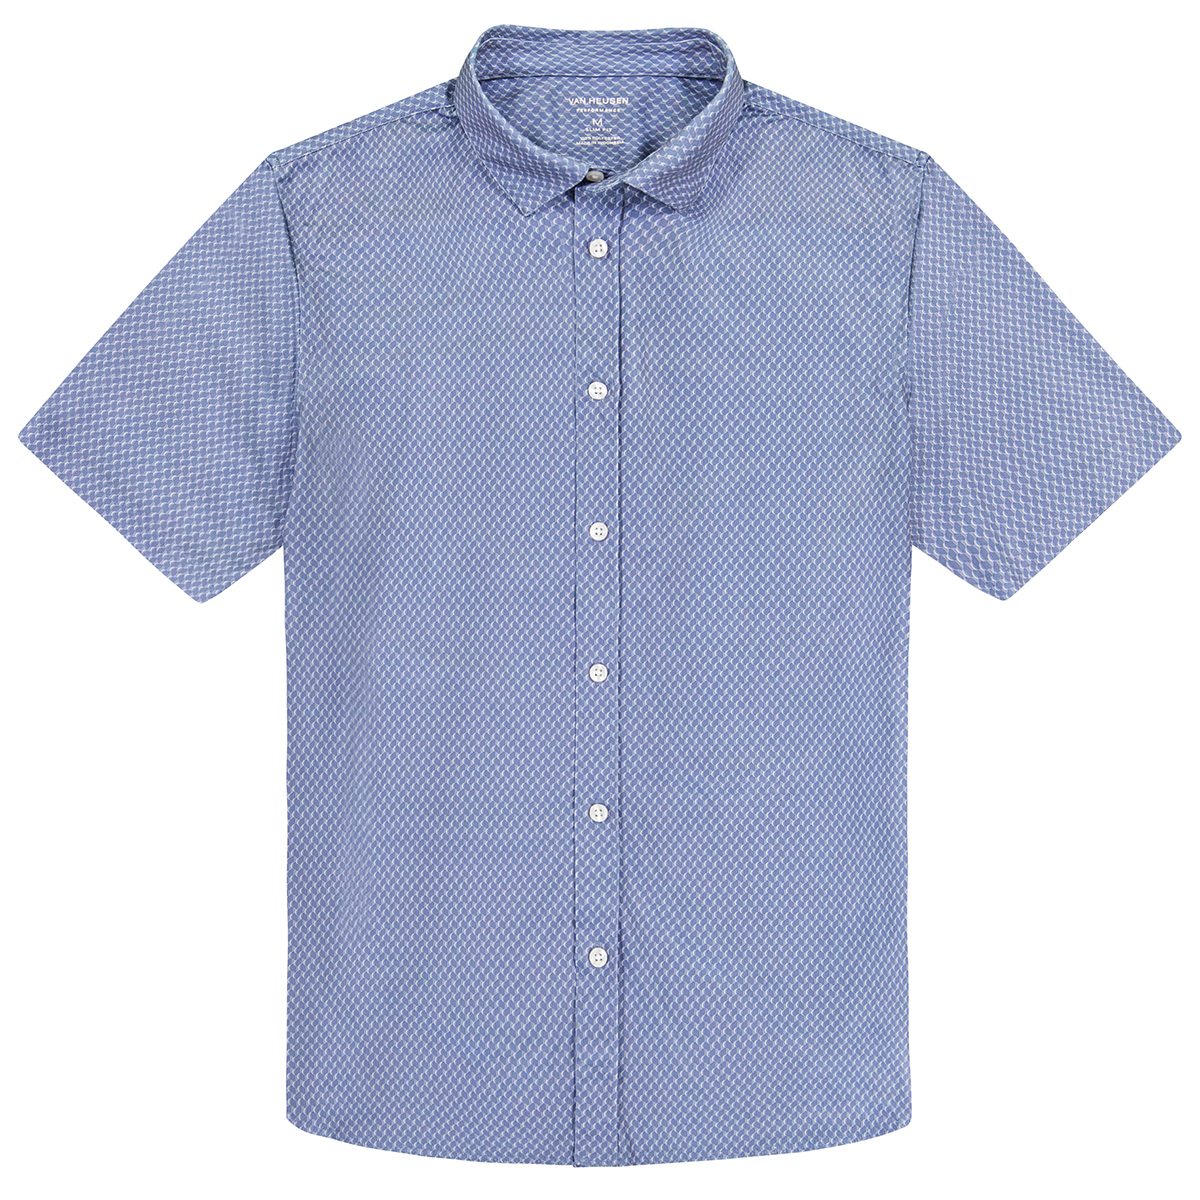 Van Heusen Men's Performance Slim Fit Short-Sleeve Button-Down Shirt